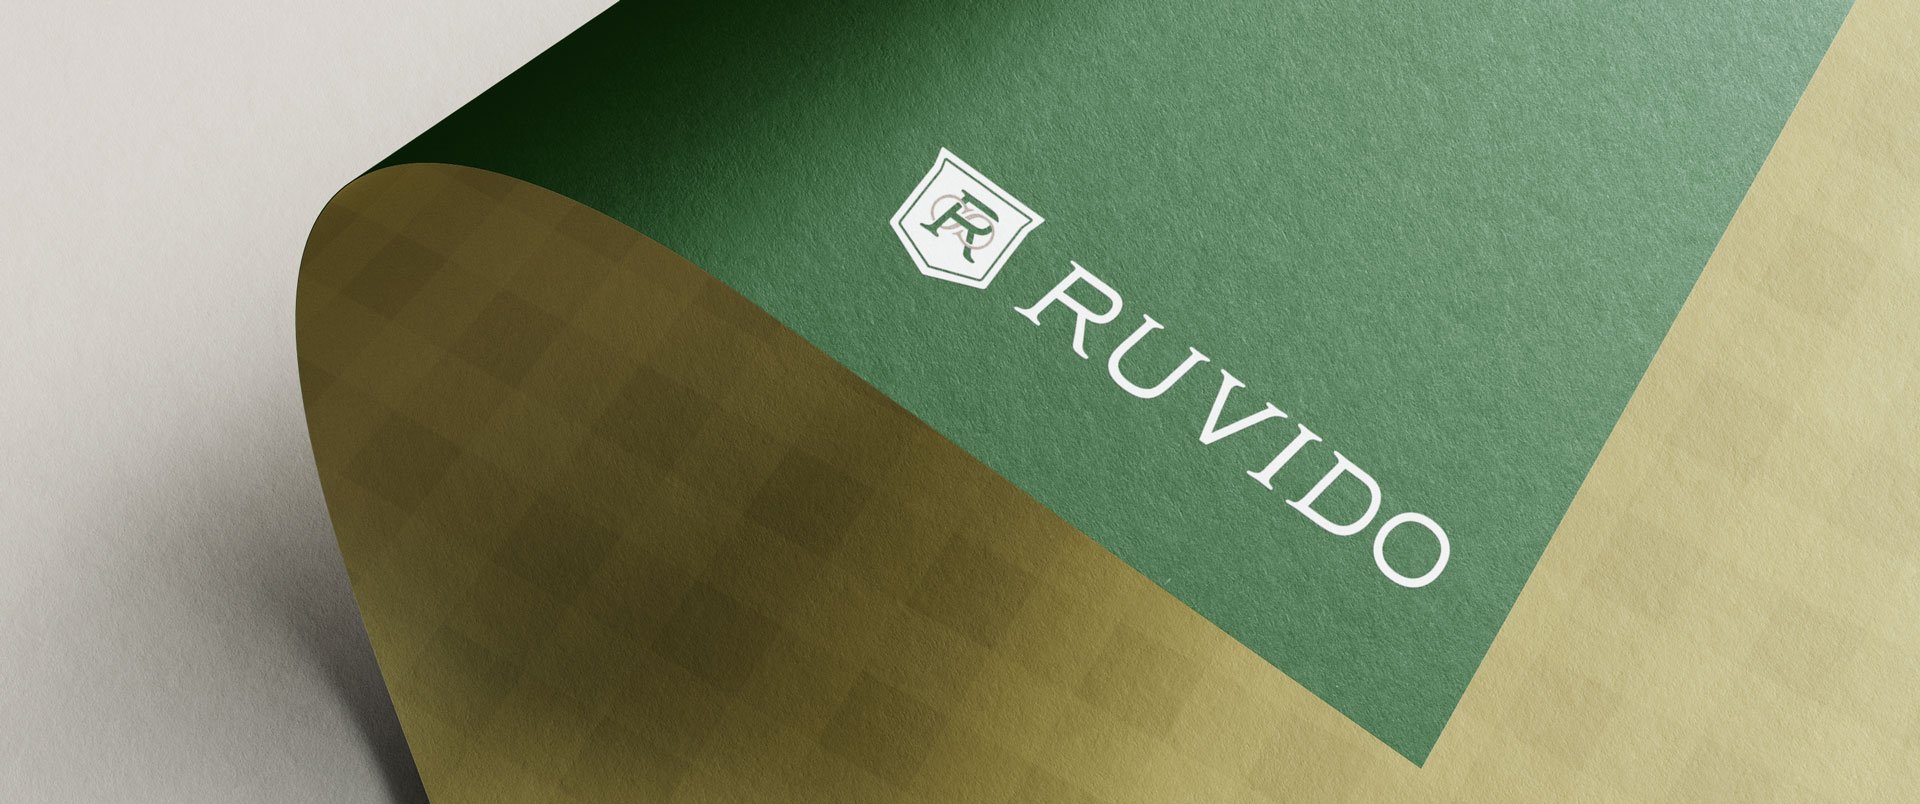 Ruvido-Logo-2.jpg